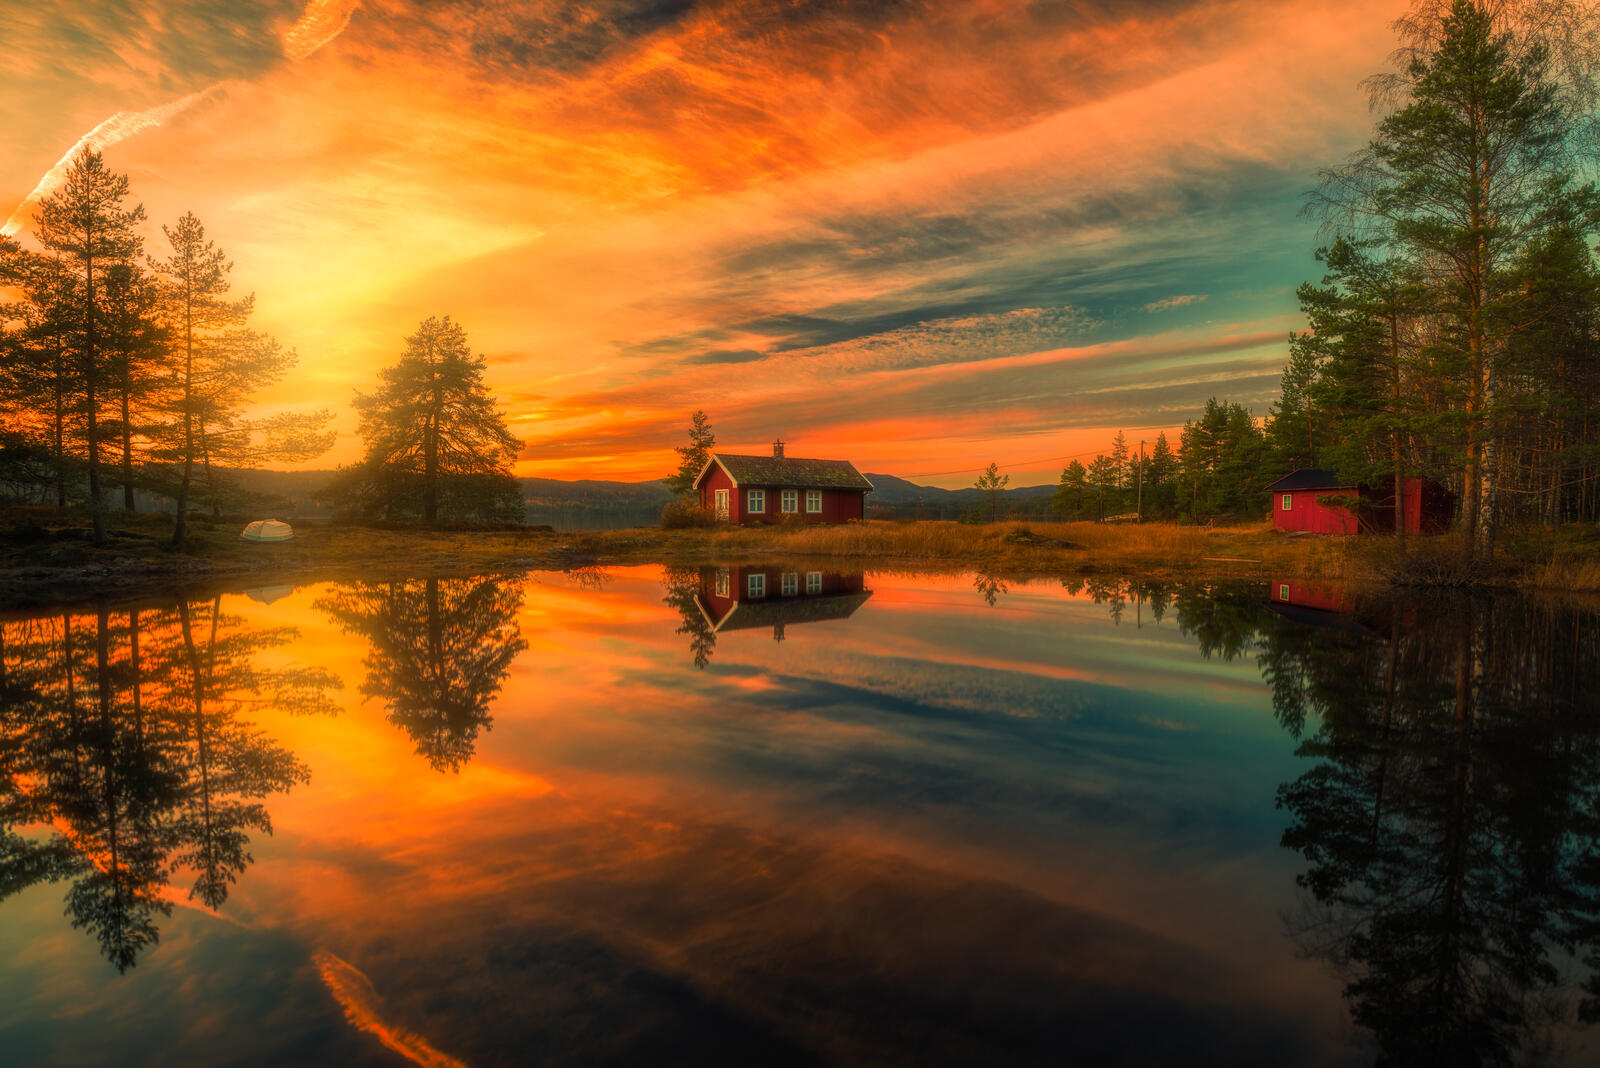 Обои Norway озеро домик на рабочий стол